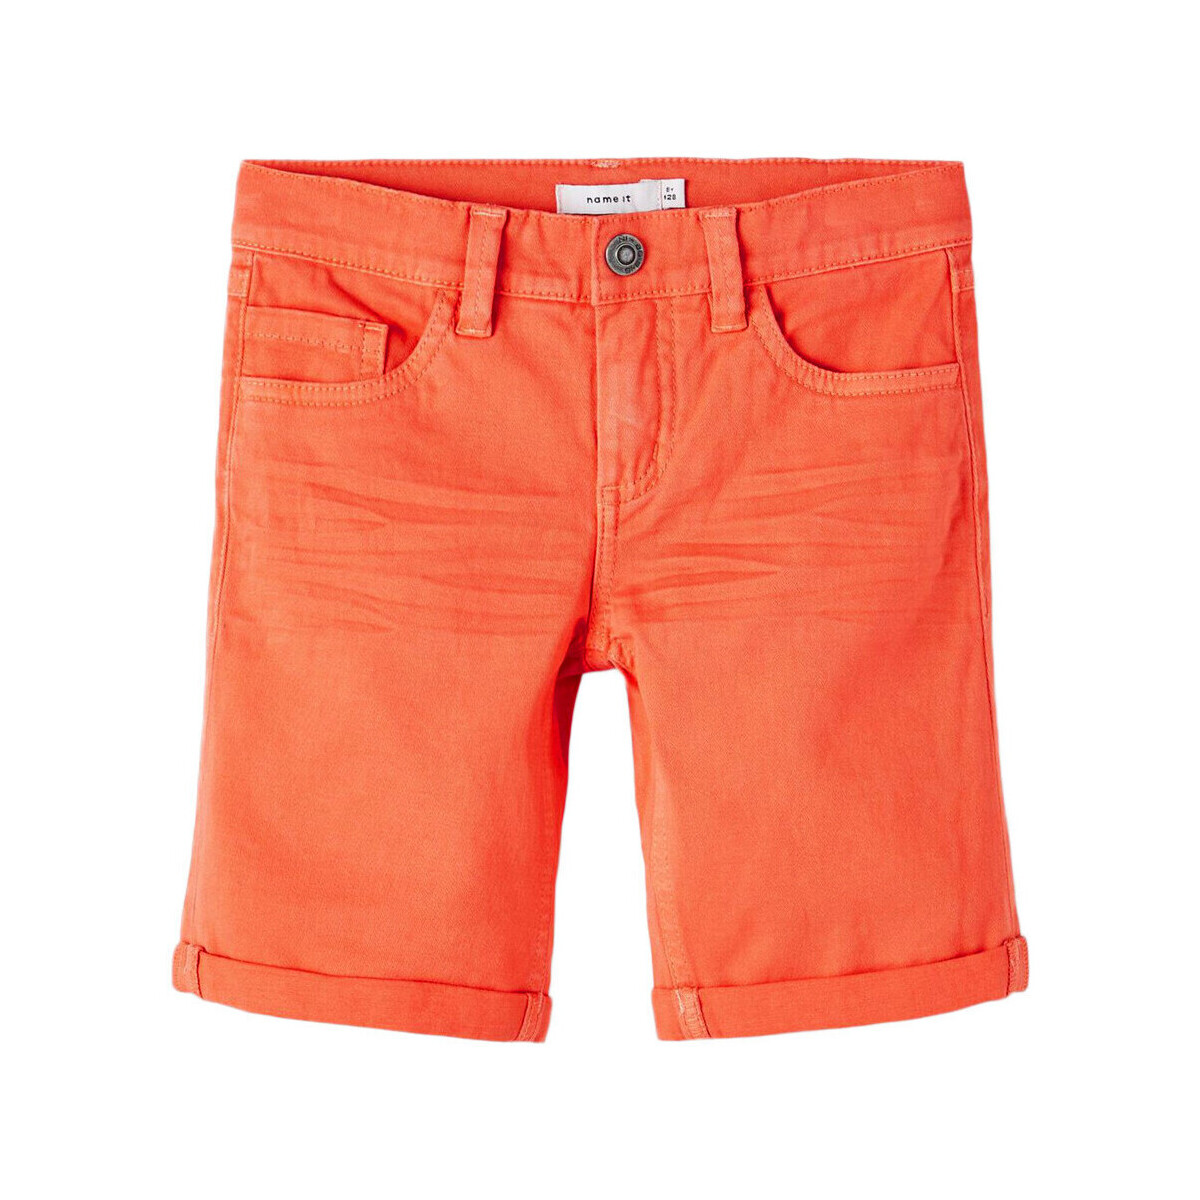 Kleidung Jungen Shorts / Bermudas Name it 13213214 Orange